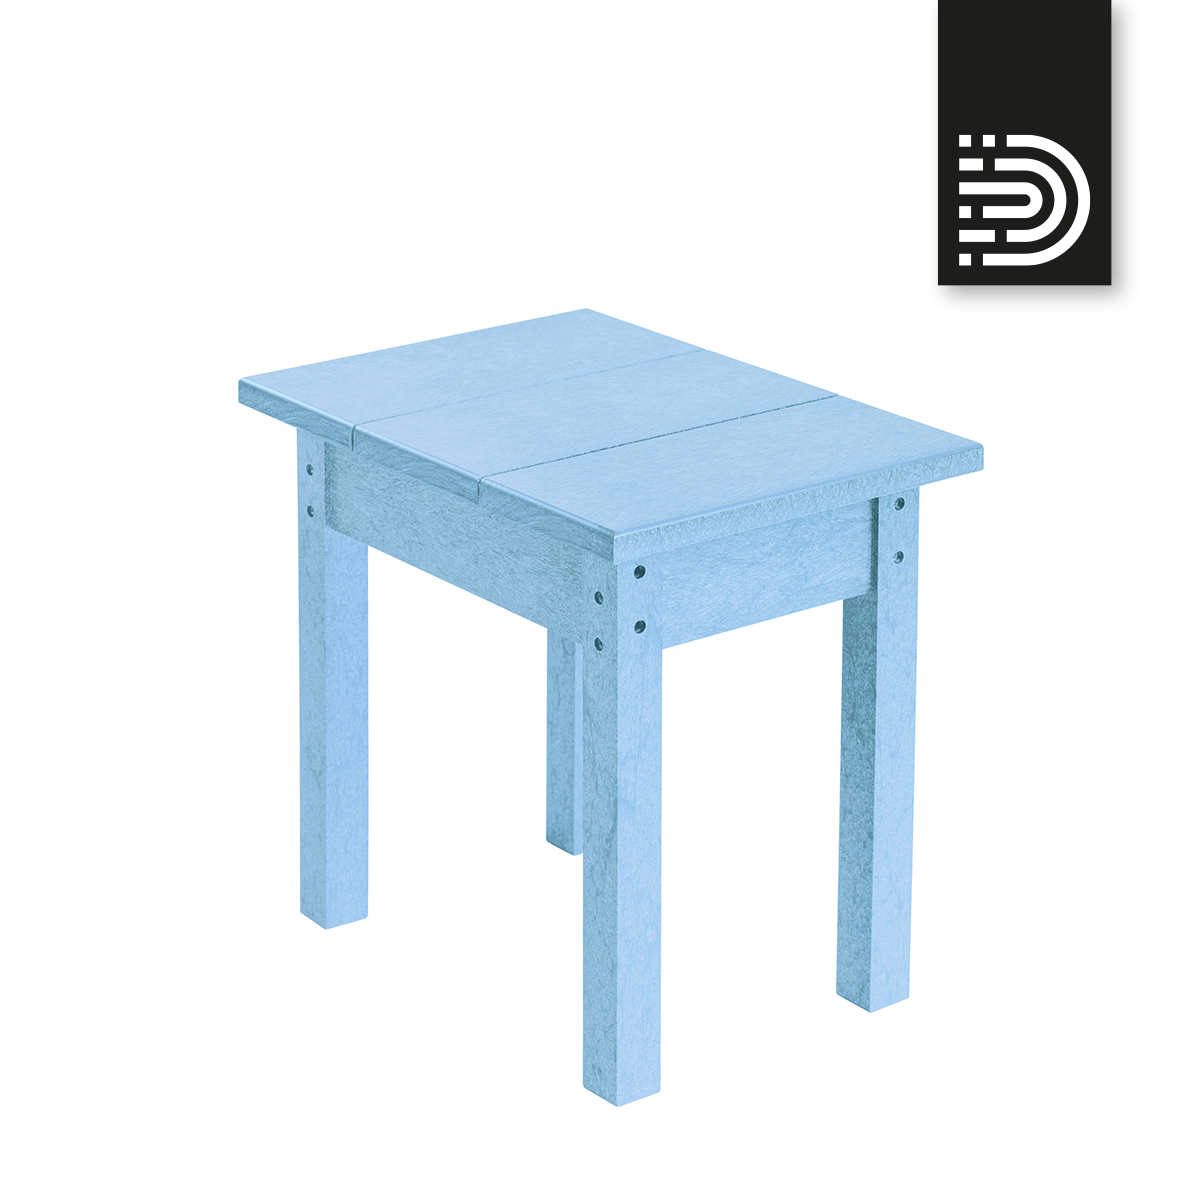 T01 small rectangular table - sky blue 12